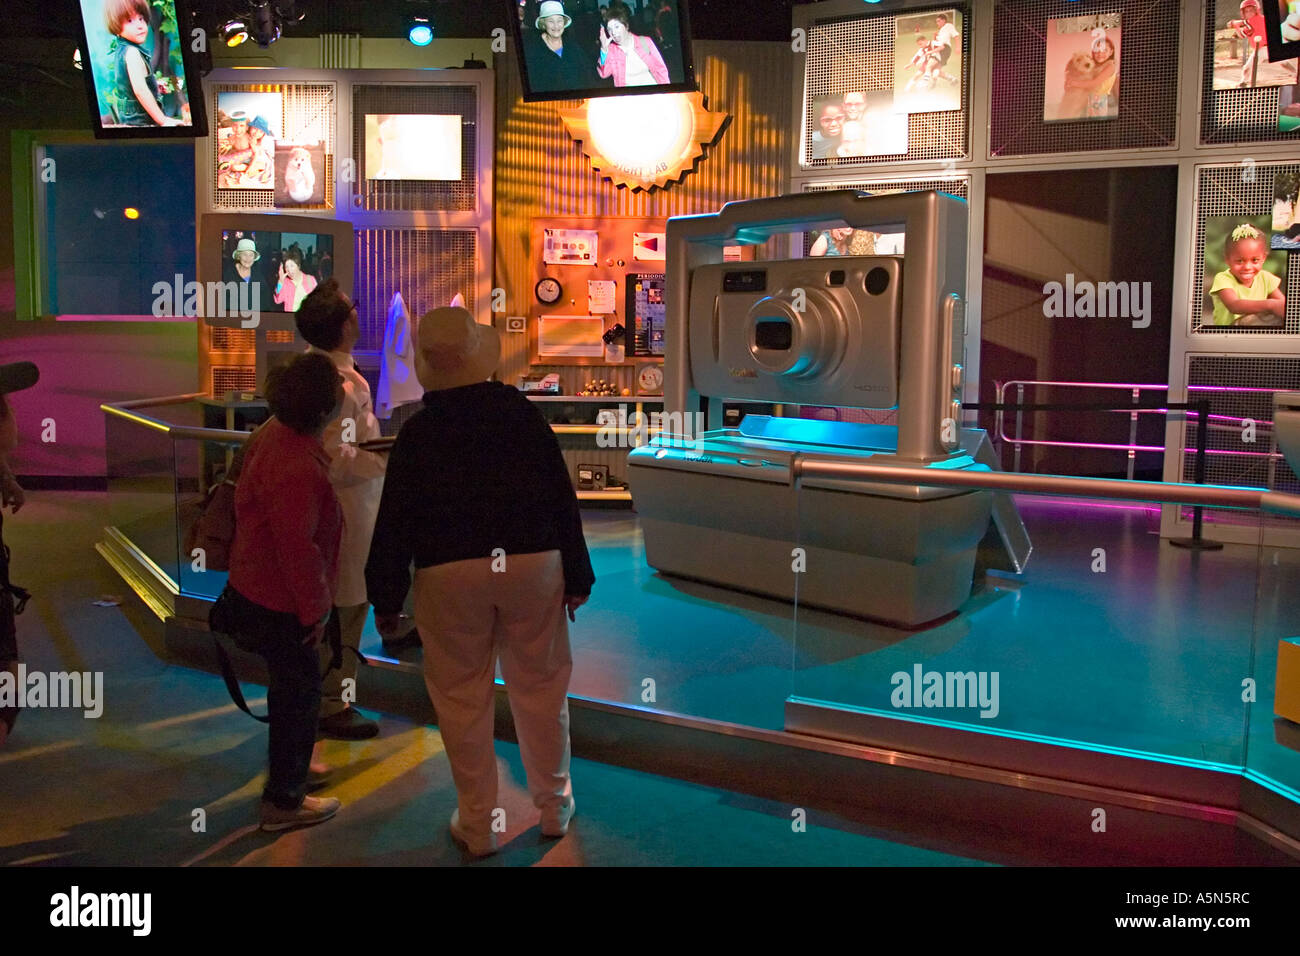 Visitors viewing photos by giant Kodak camera in Imagination exhibit Epcot Walt Disney World Orlando Florida Stock Photo